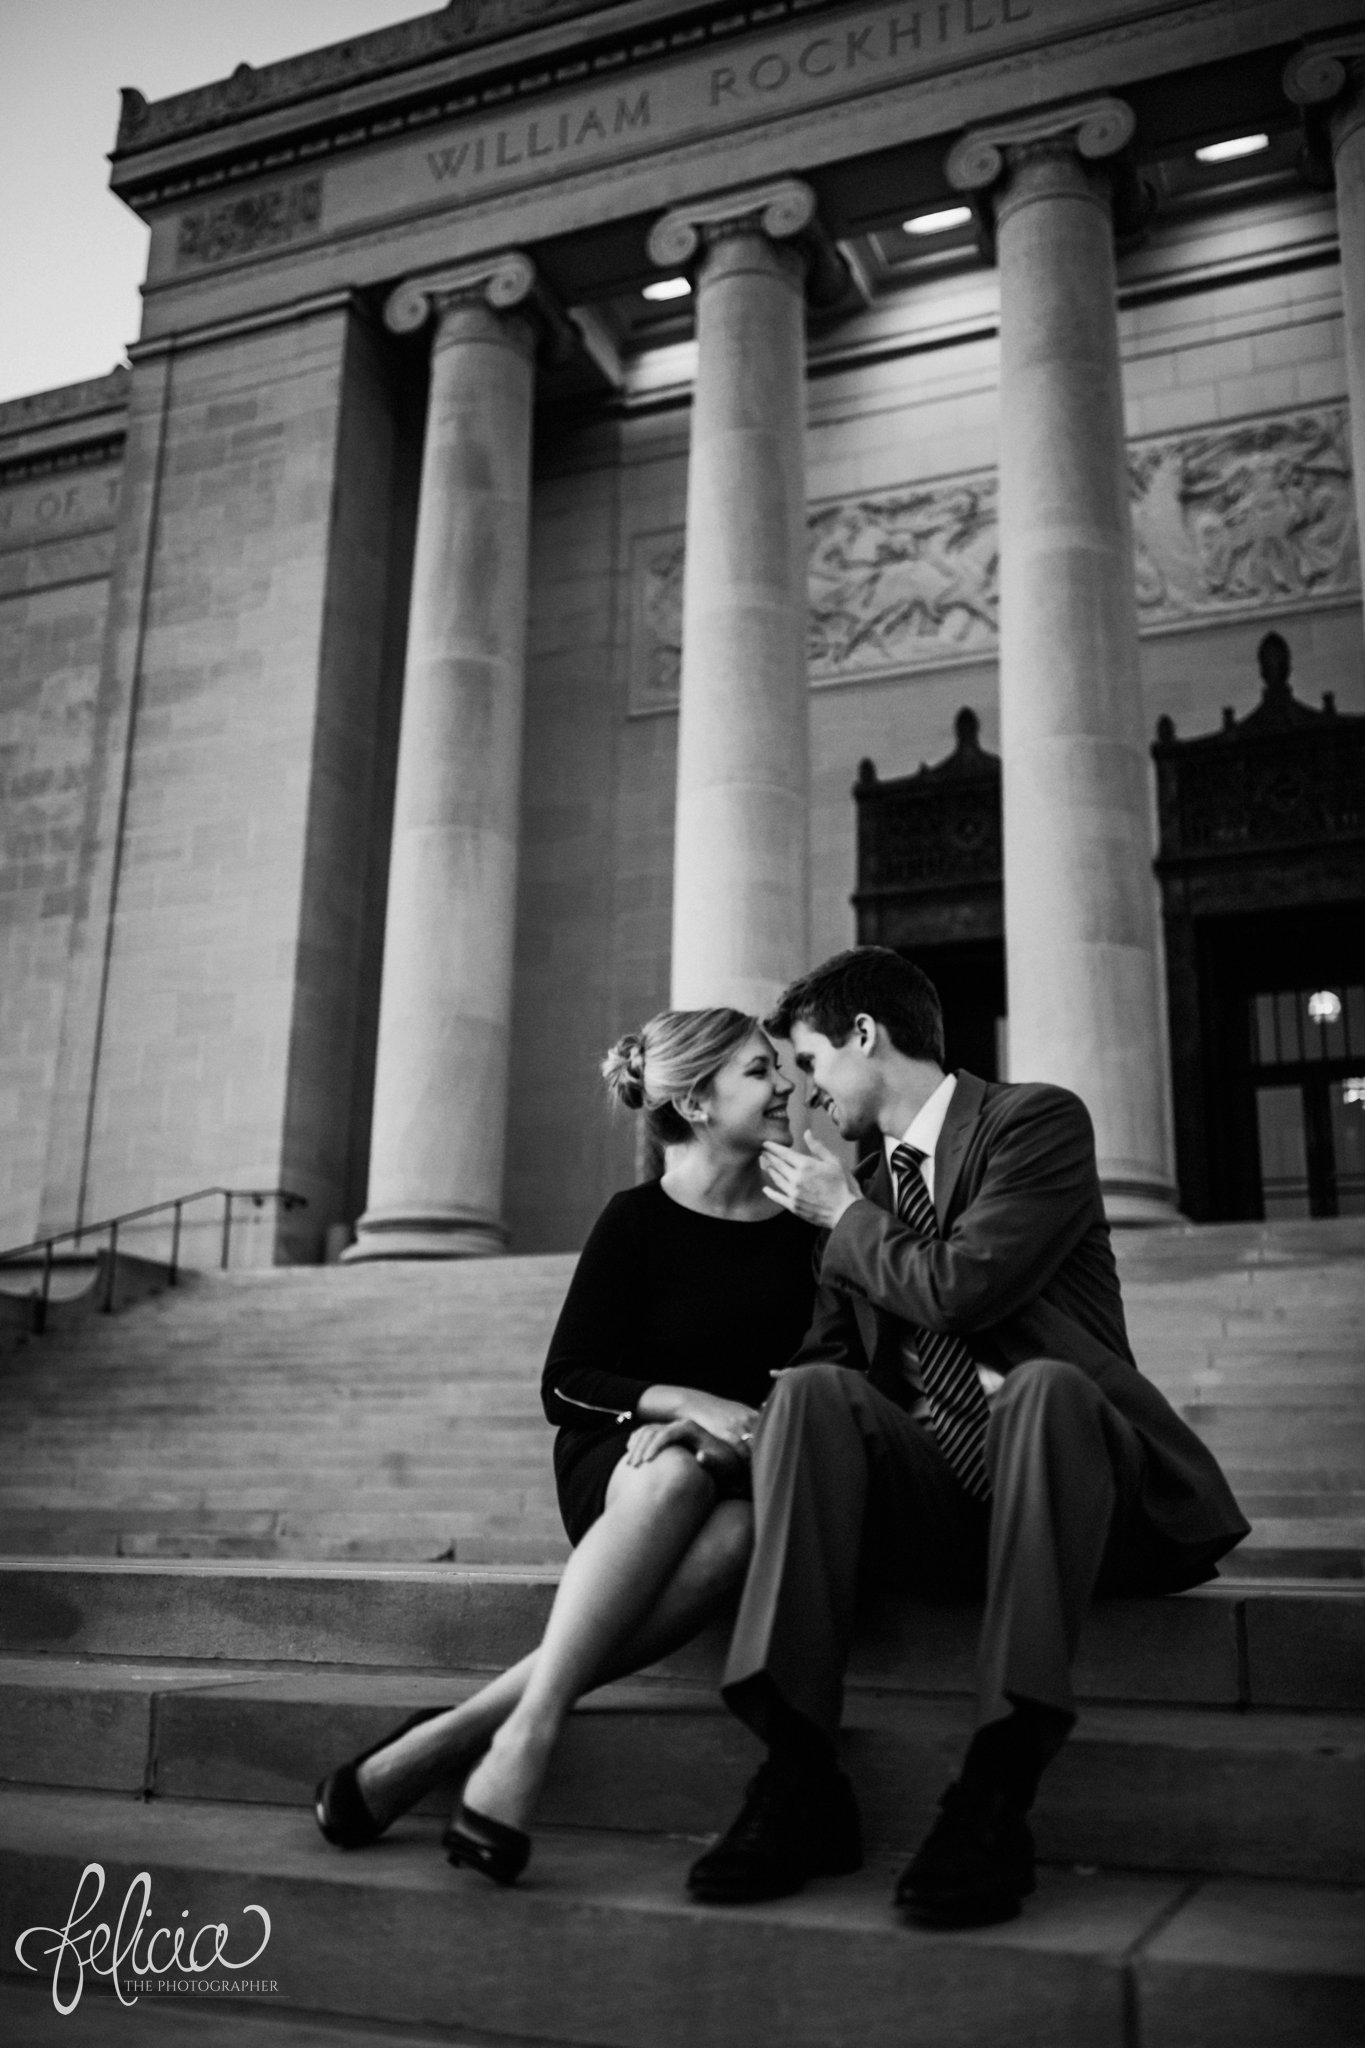 images by feliciathephotographer.com | wedding photographer | kansas city missouri | engagement | black and white | joy | nelson atkins | romantic | kiss | stone | columns | 